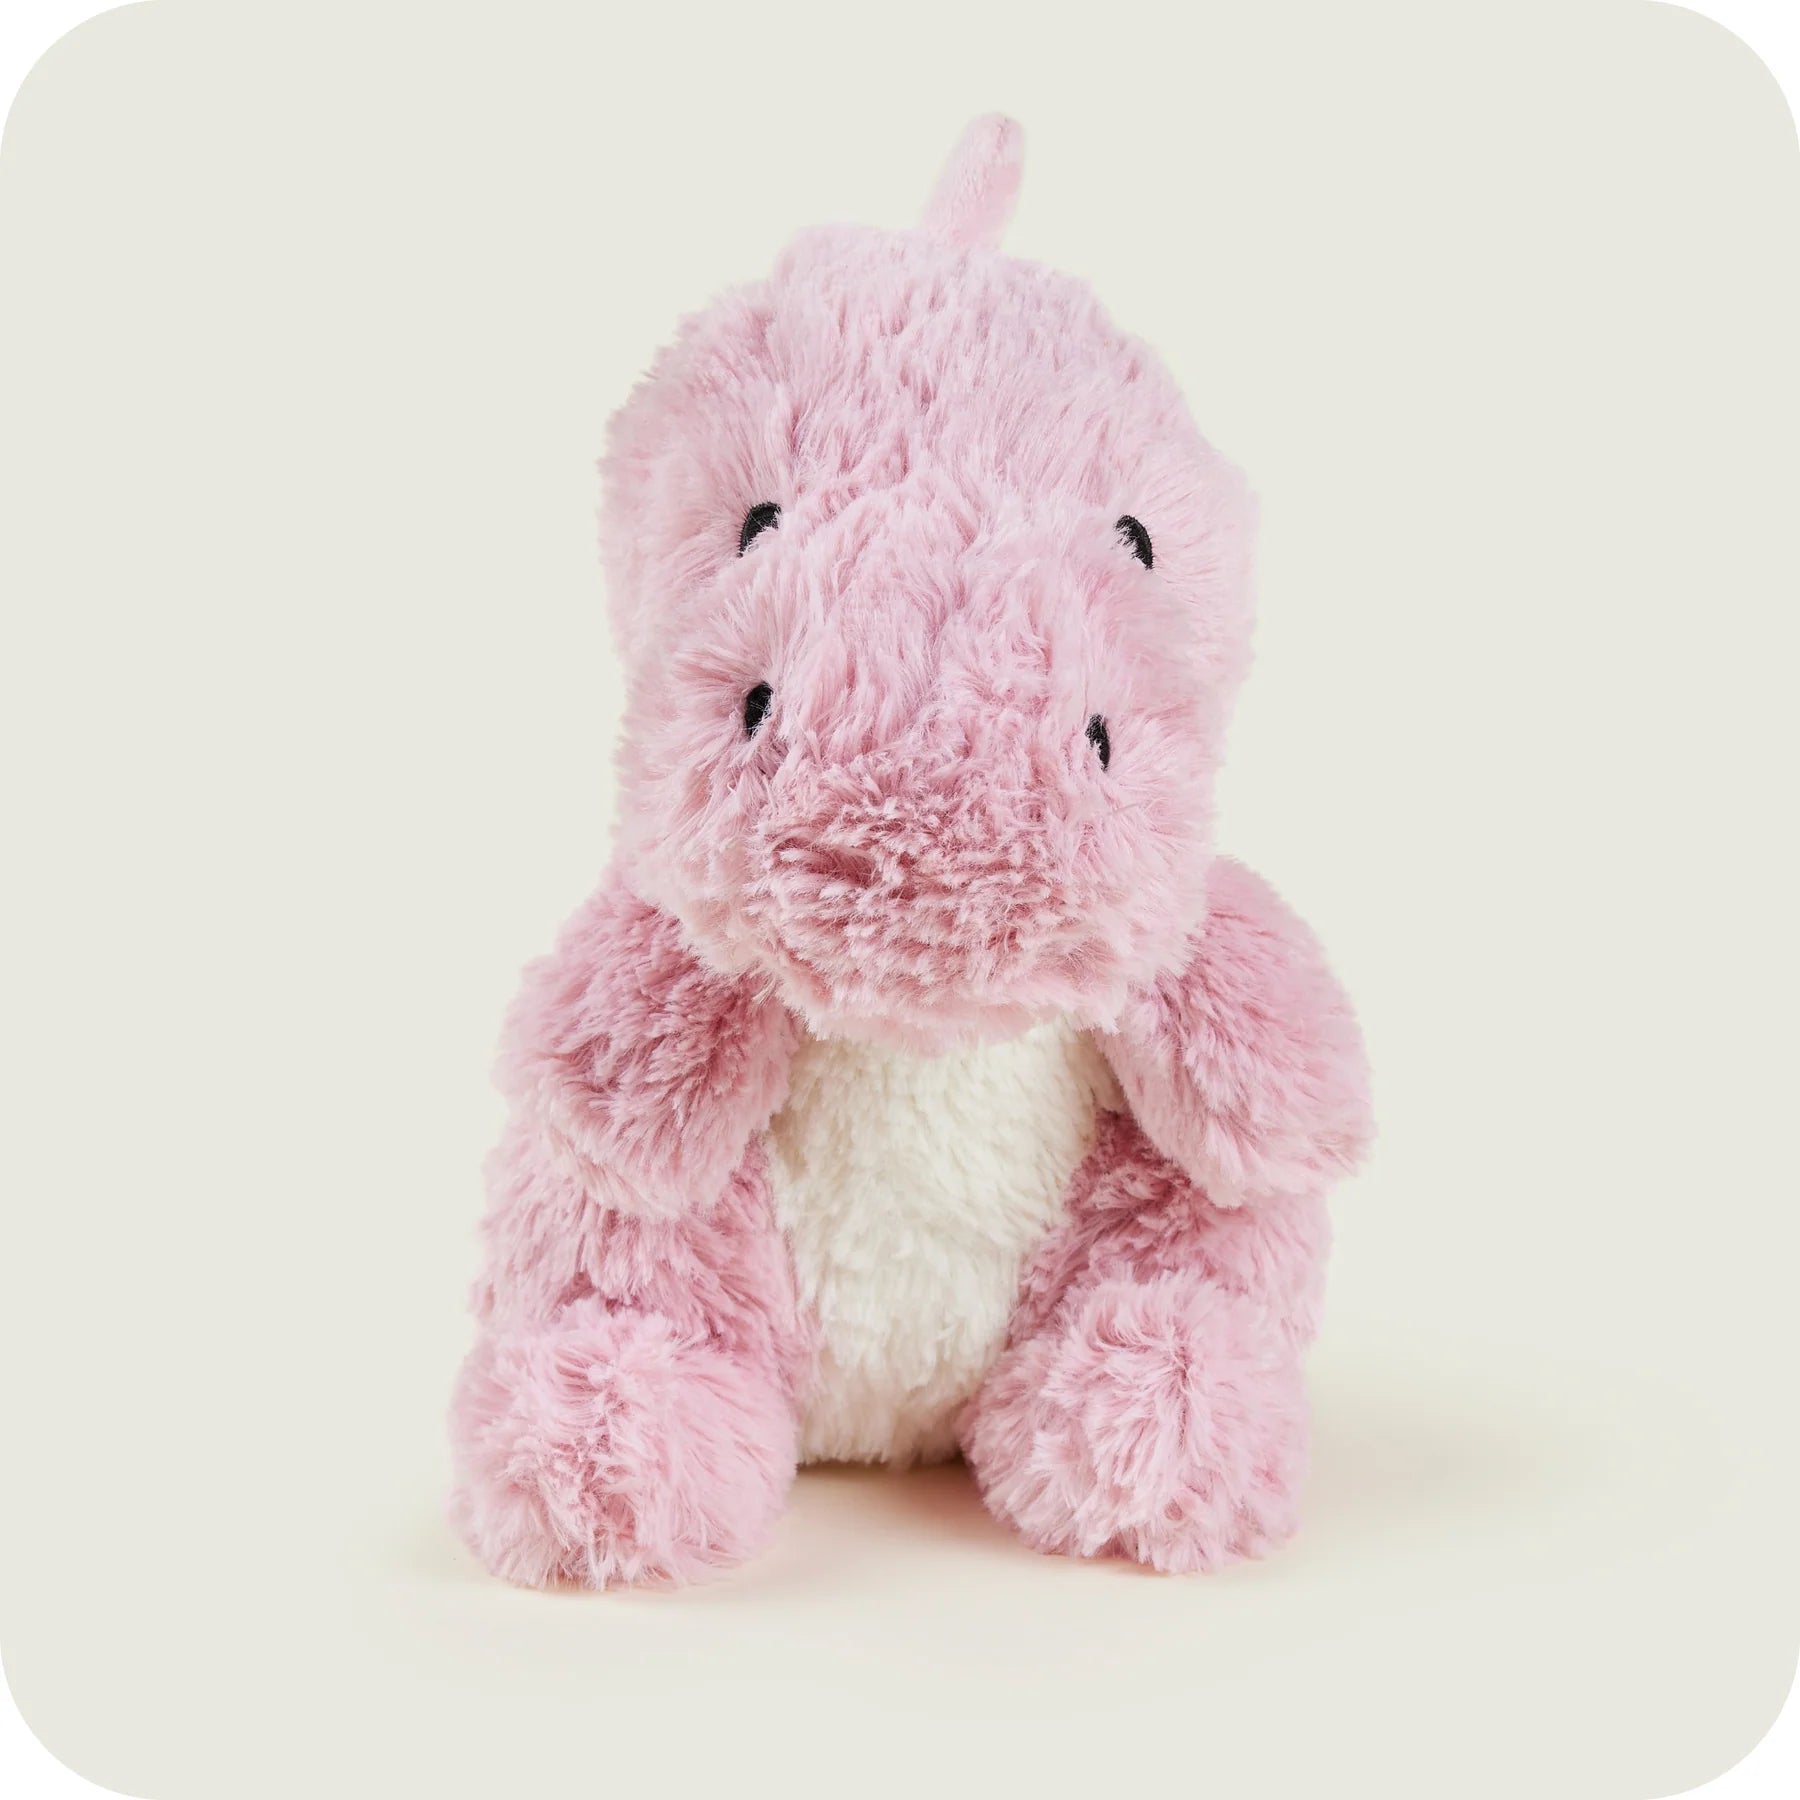 Warmies Plush Baby Dinosaur Pink, Personal Care